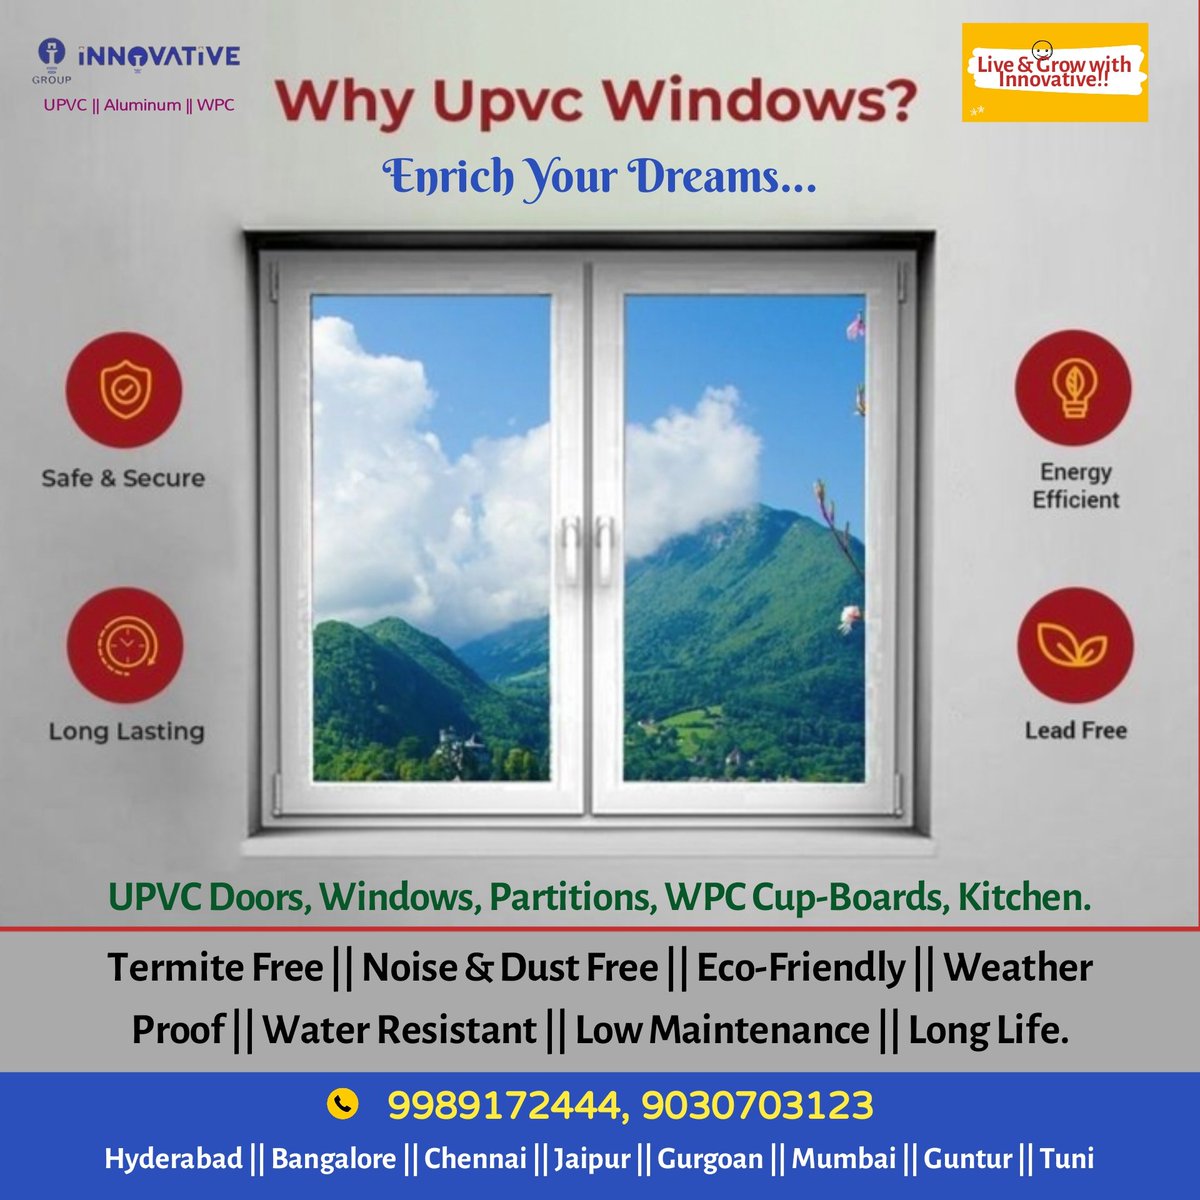 For Quality UPVC Windows & Doors, Please contact me. Ph: 9030703123.